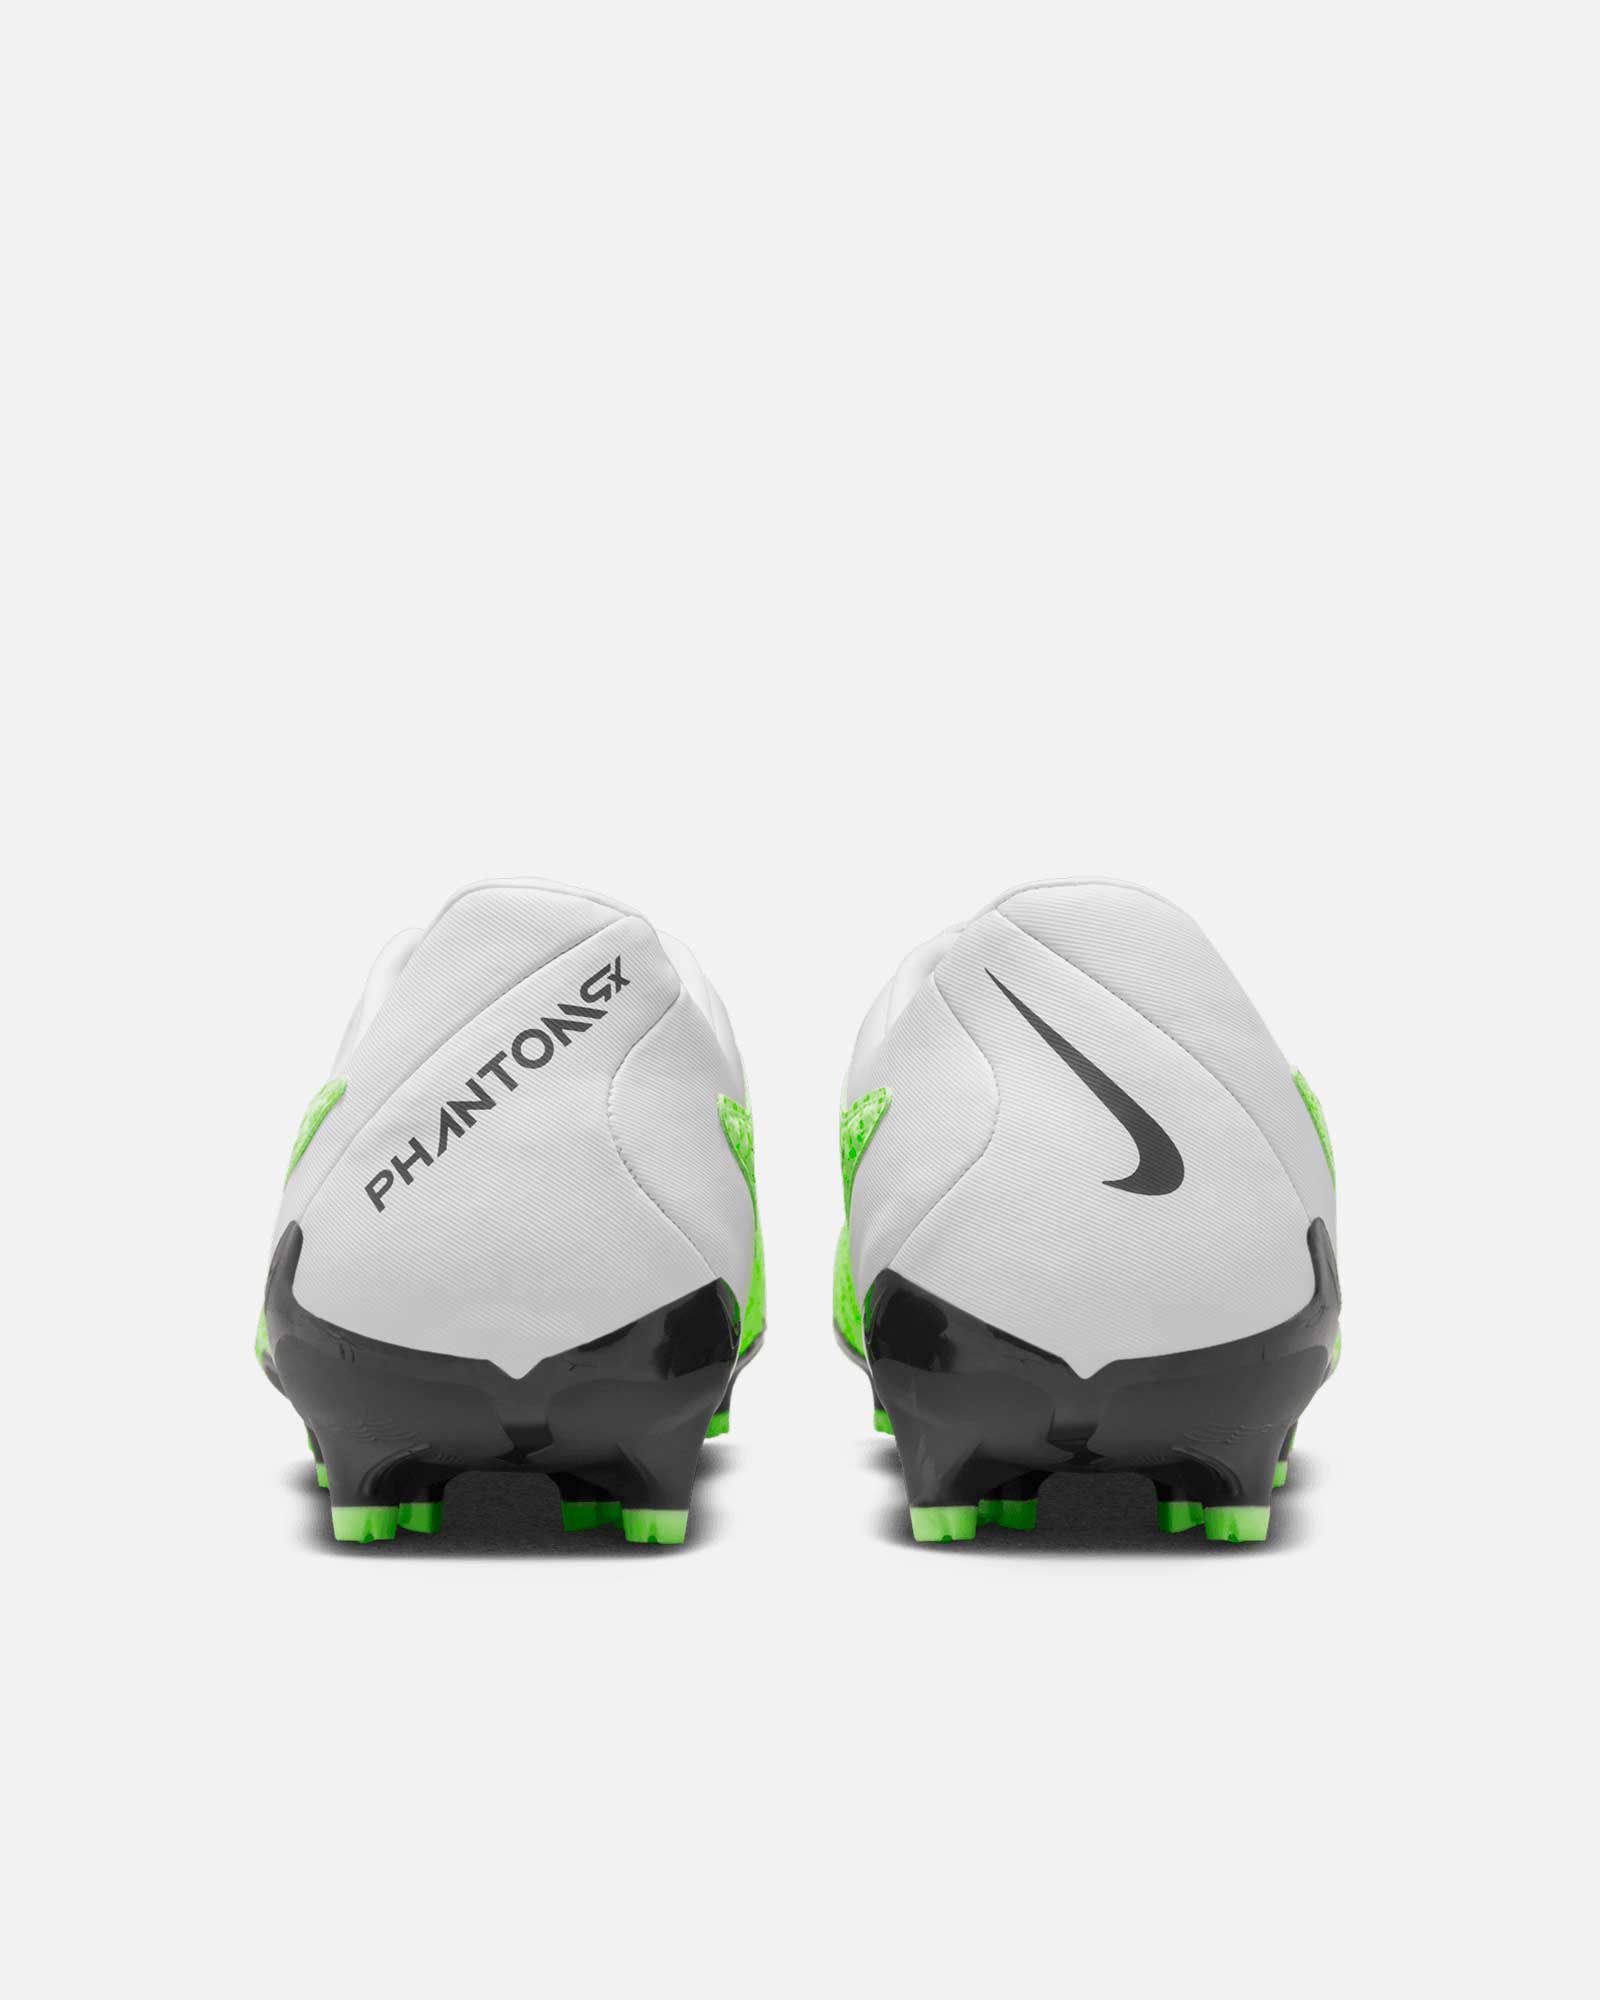 Nuevas Botas Nike Luminous Pack - Blog Fútbol Factory